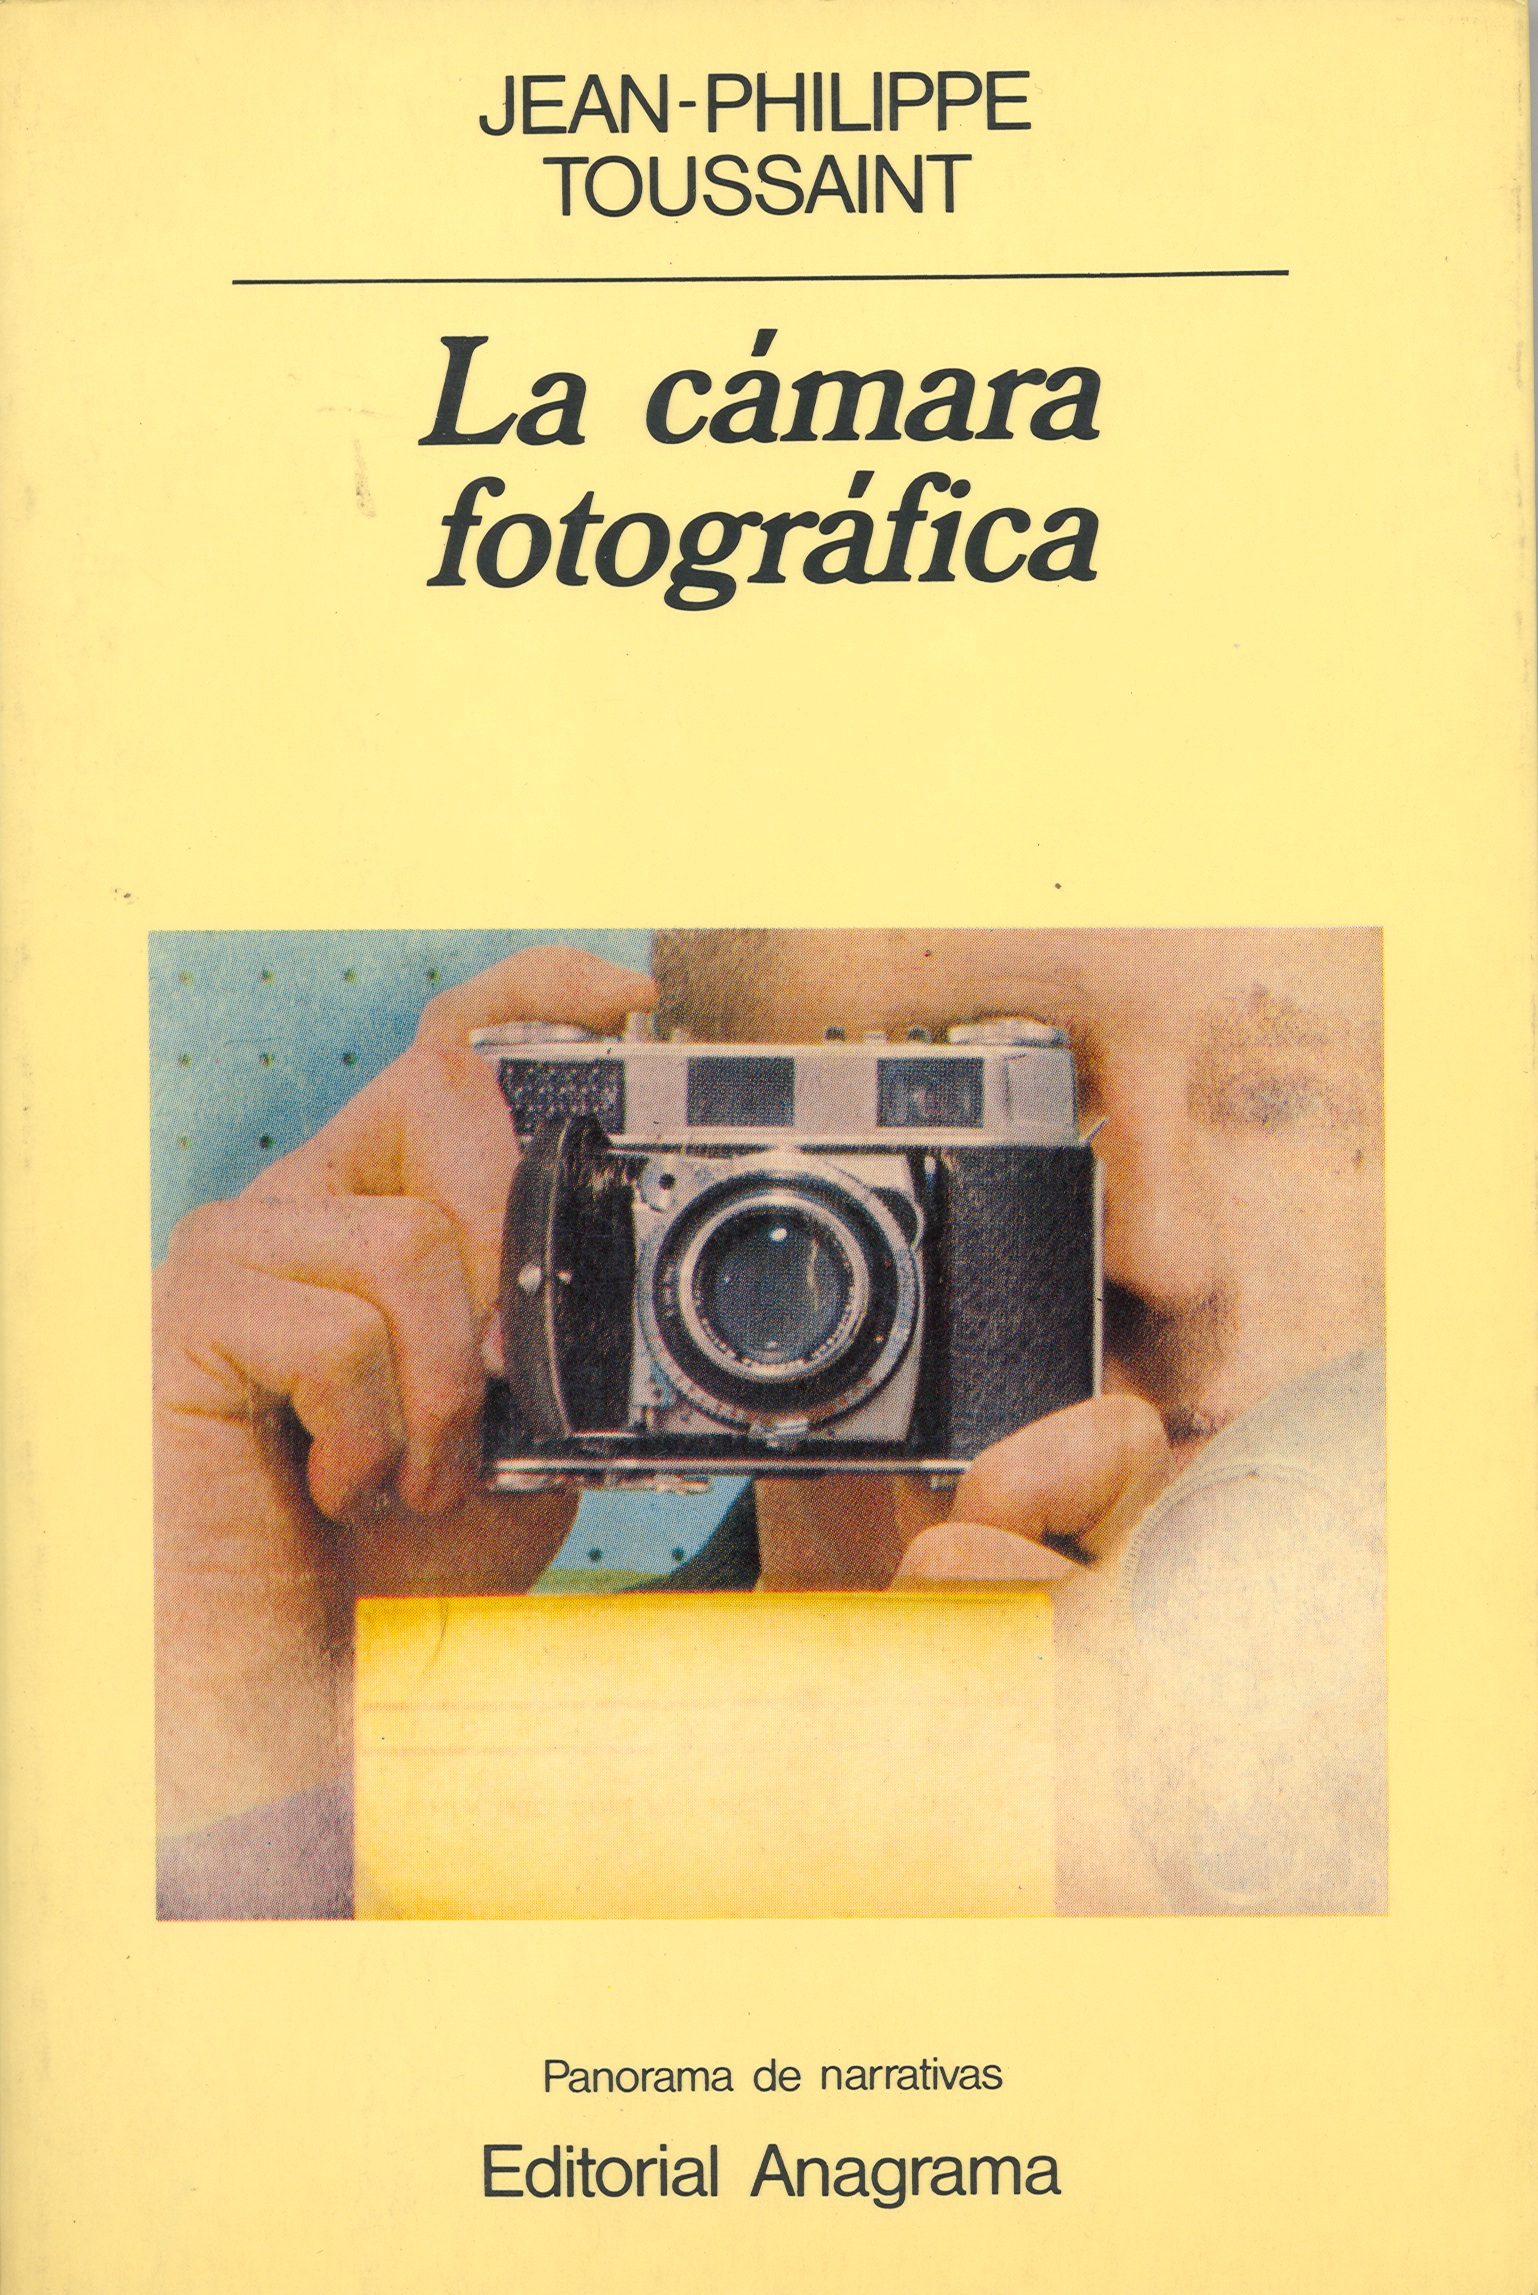 La cámara fotográfica - Toussaint, Jean-Philippe - 978-84-339-3170-2 -  Editorial Anagrama